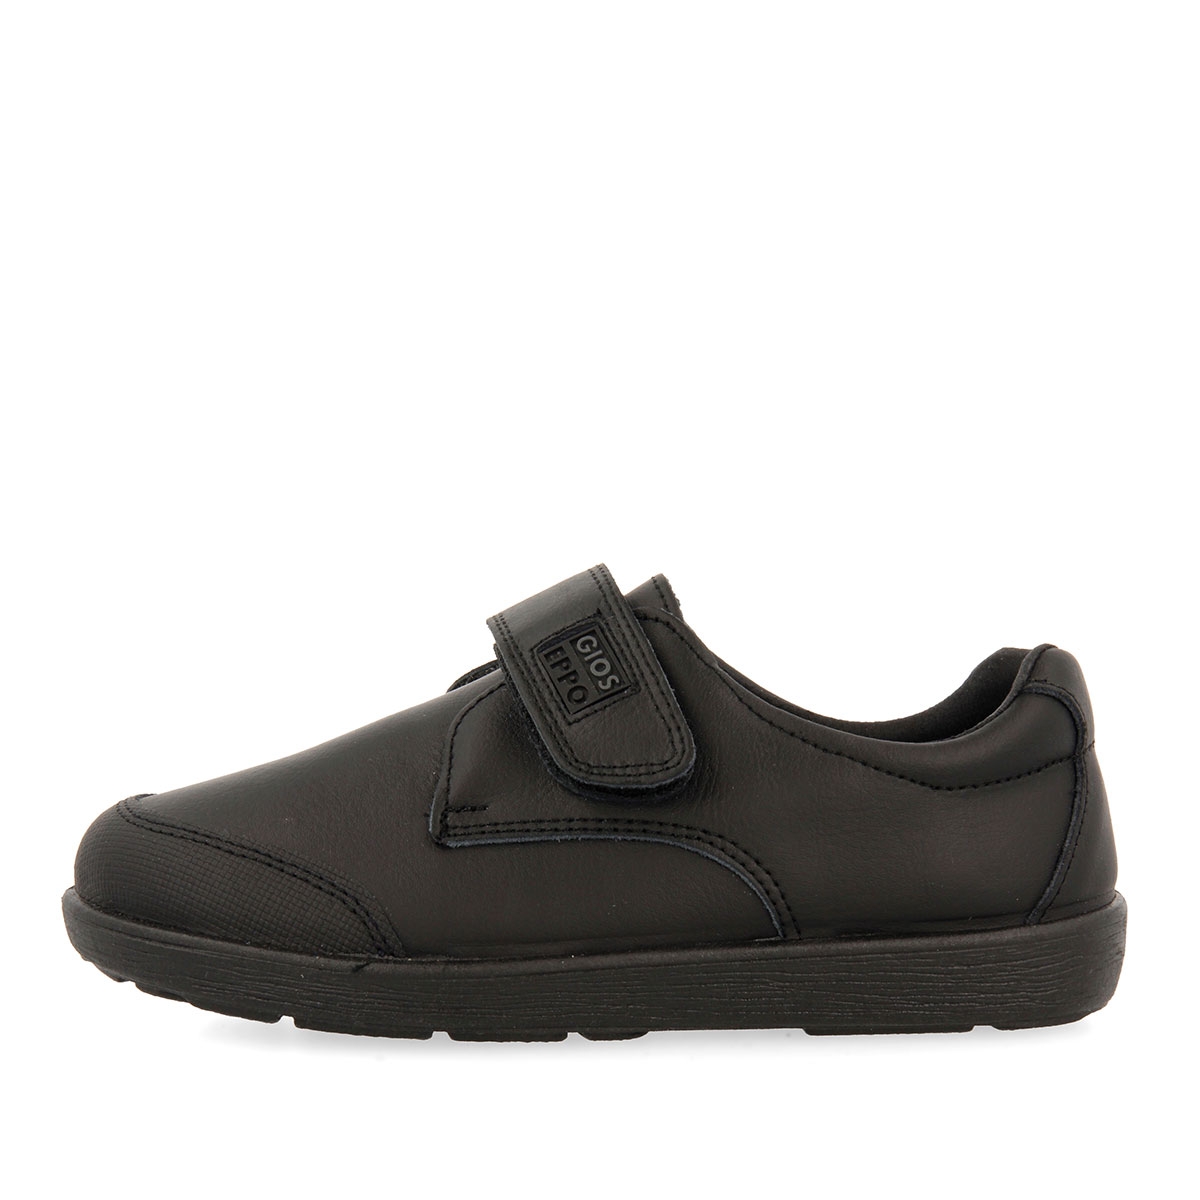 gioseppo-zapatos-escolares-negros-con-cierre-ajustable-para-nino-beta-tendencia-1-3260b78b5fbb370-fashionalia - ANDAINA